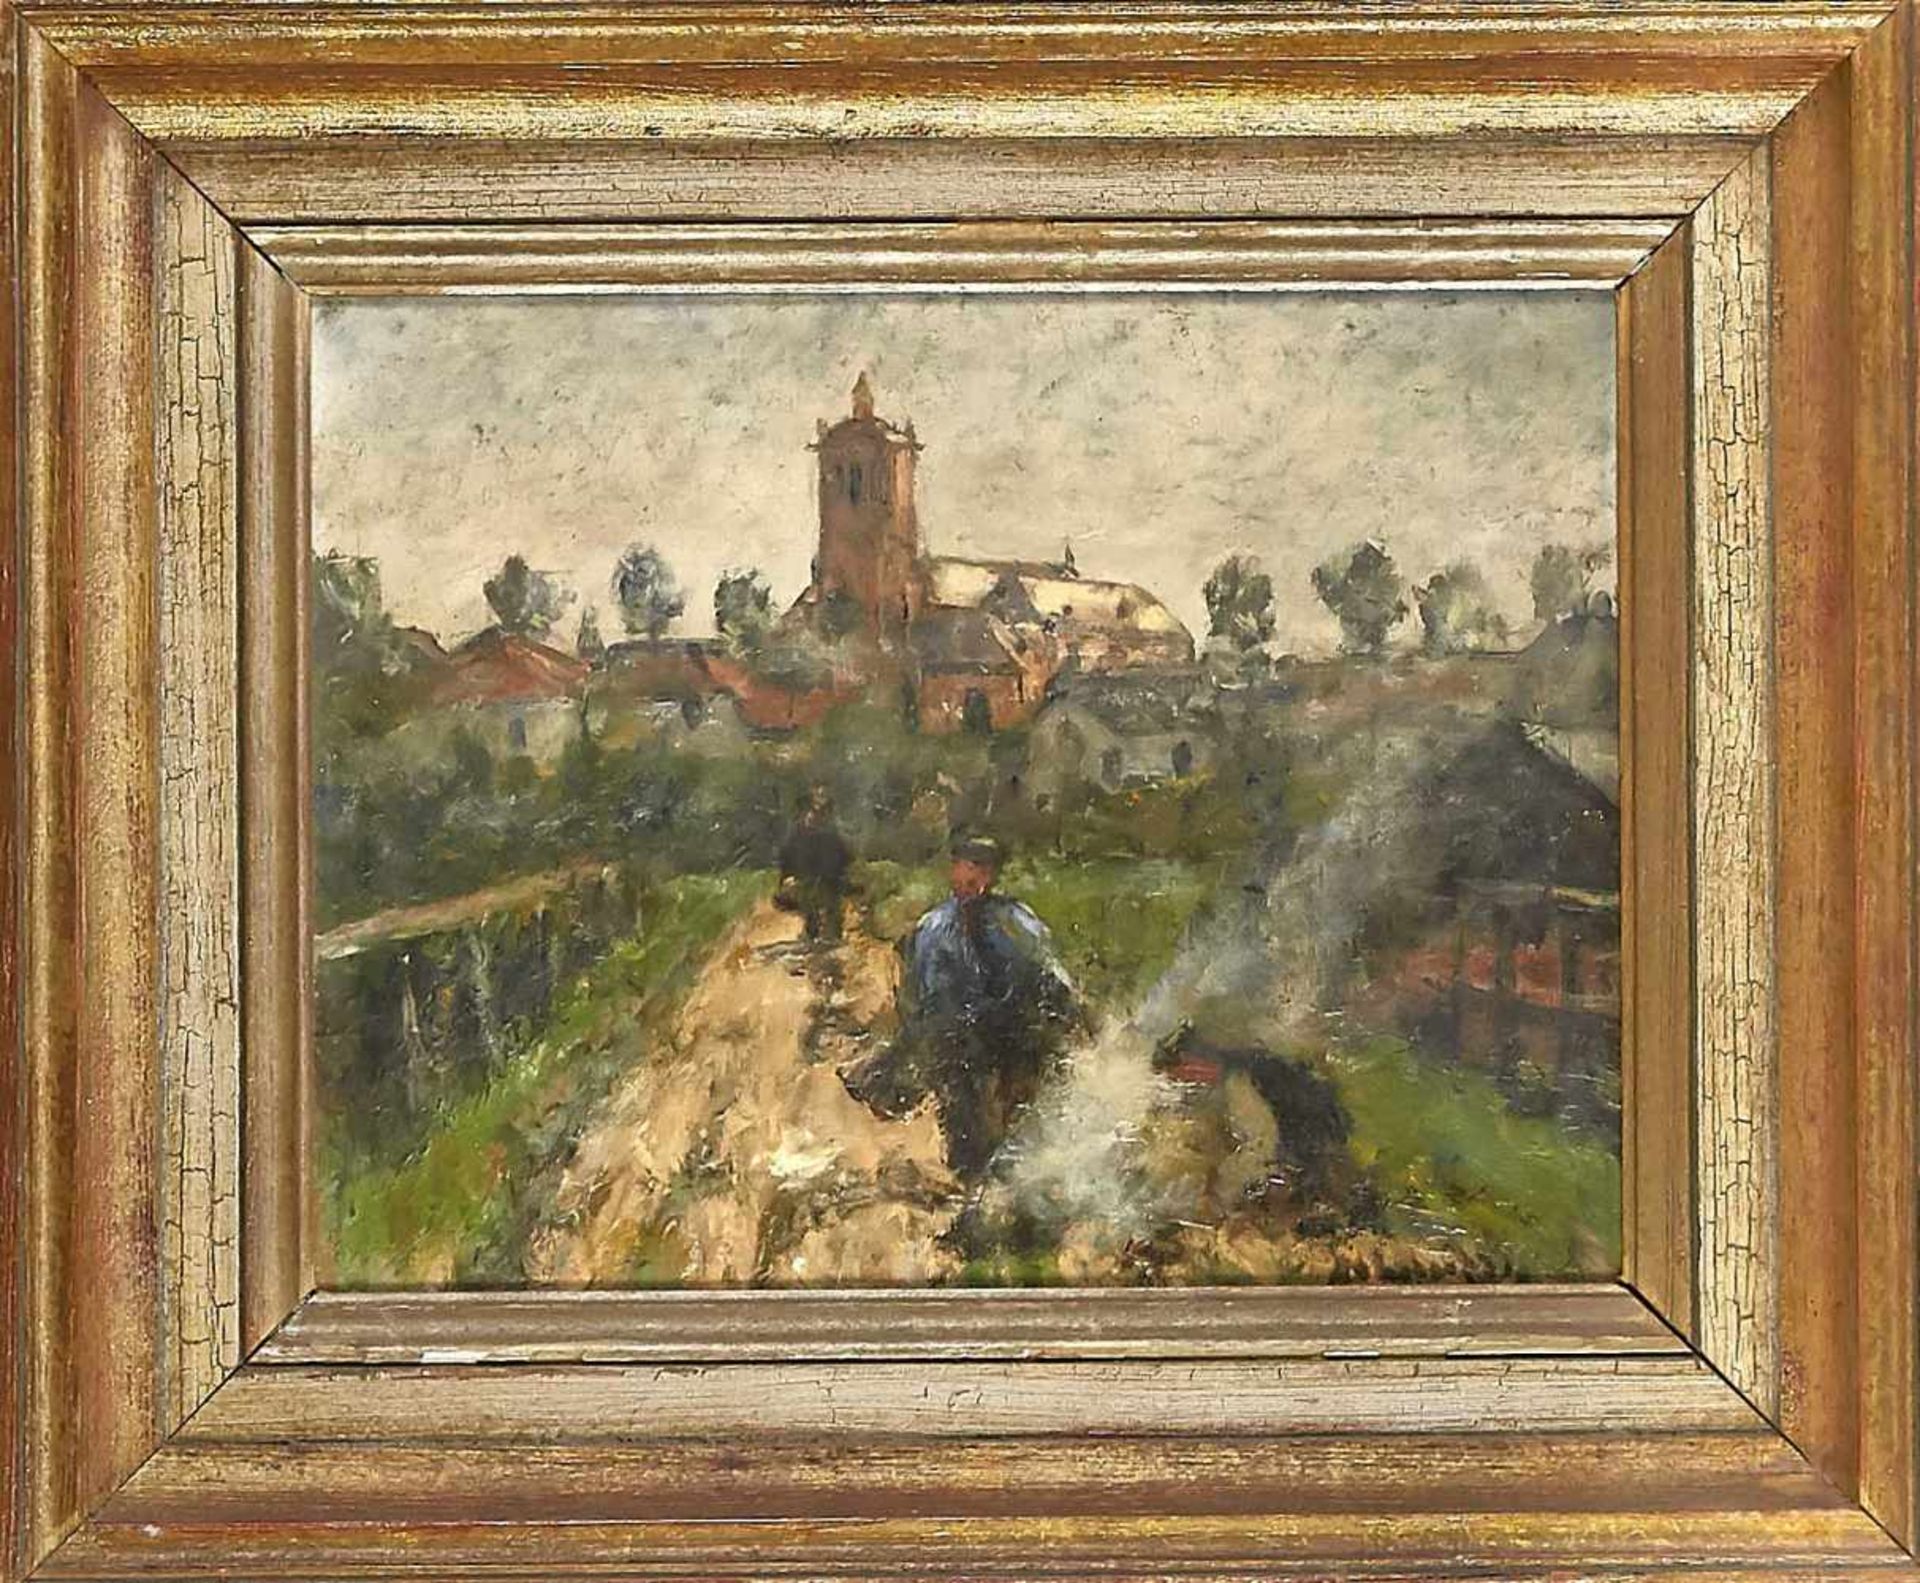 Helmut Liesegang (1858-1945), German landscape painter of the Düsseldorf School. Country<